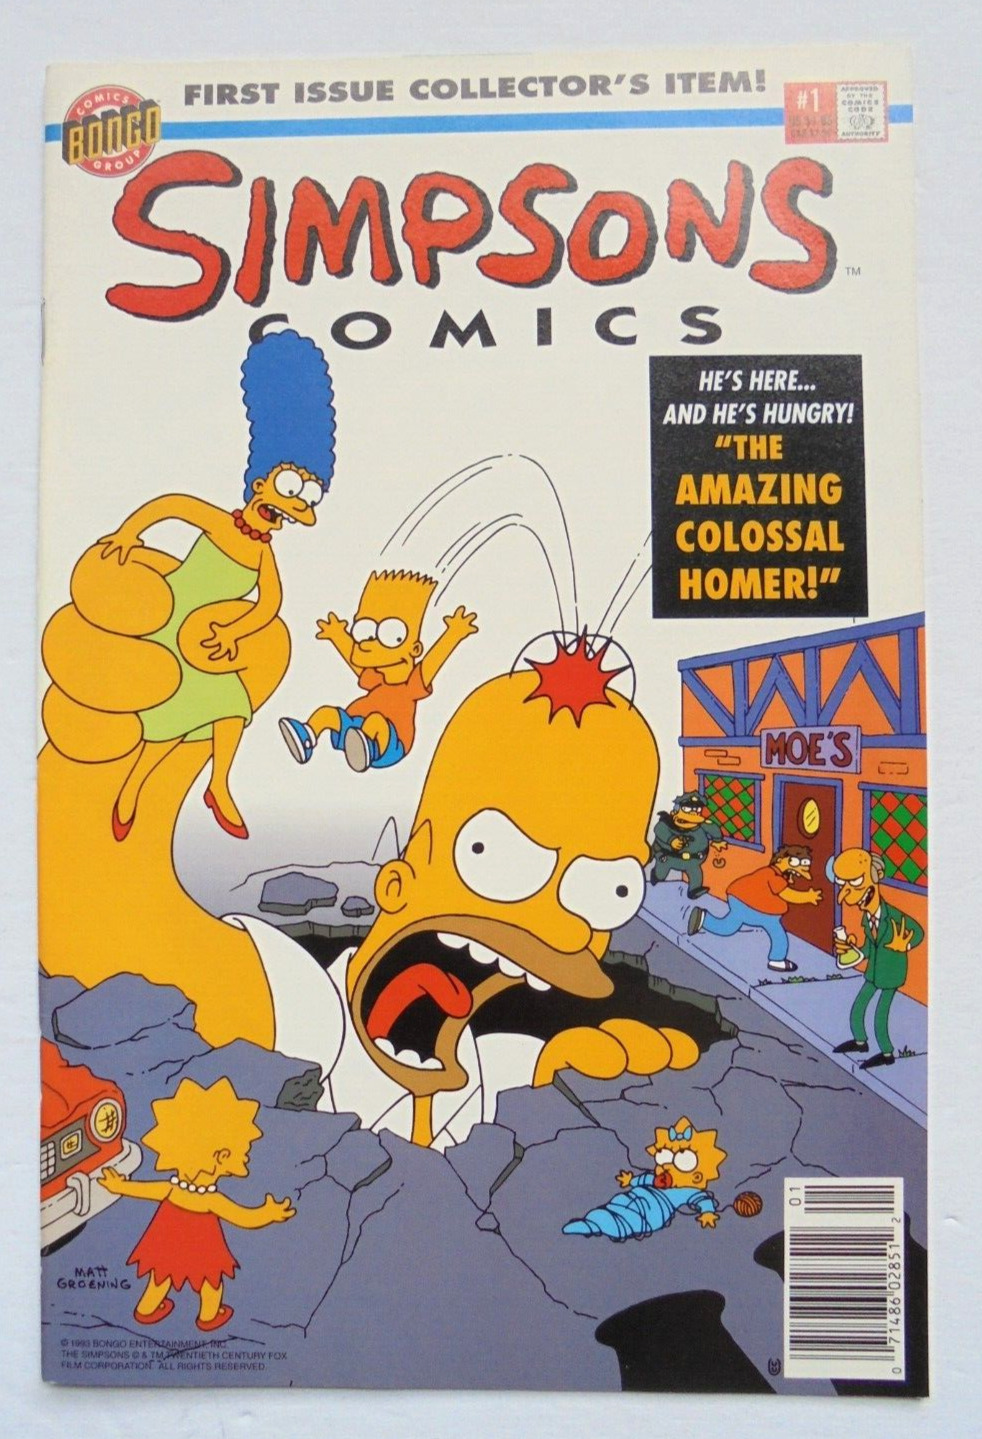 1993 BONGO COMICS GROUP SIMPSONS COMICS #1 FLIP BOOK NEWSSTAND EDITION NO POSTER